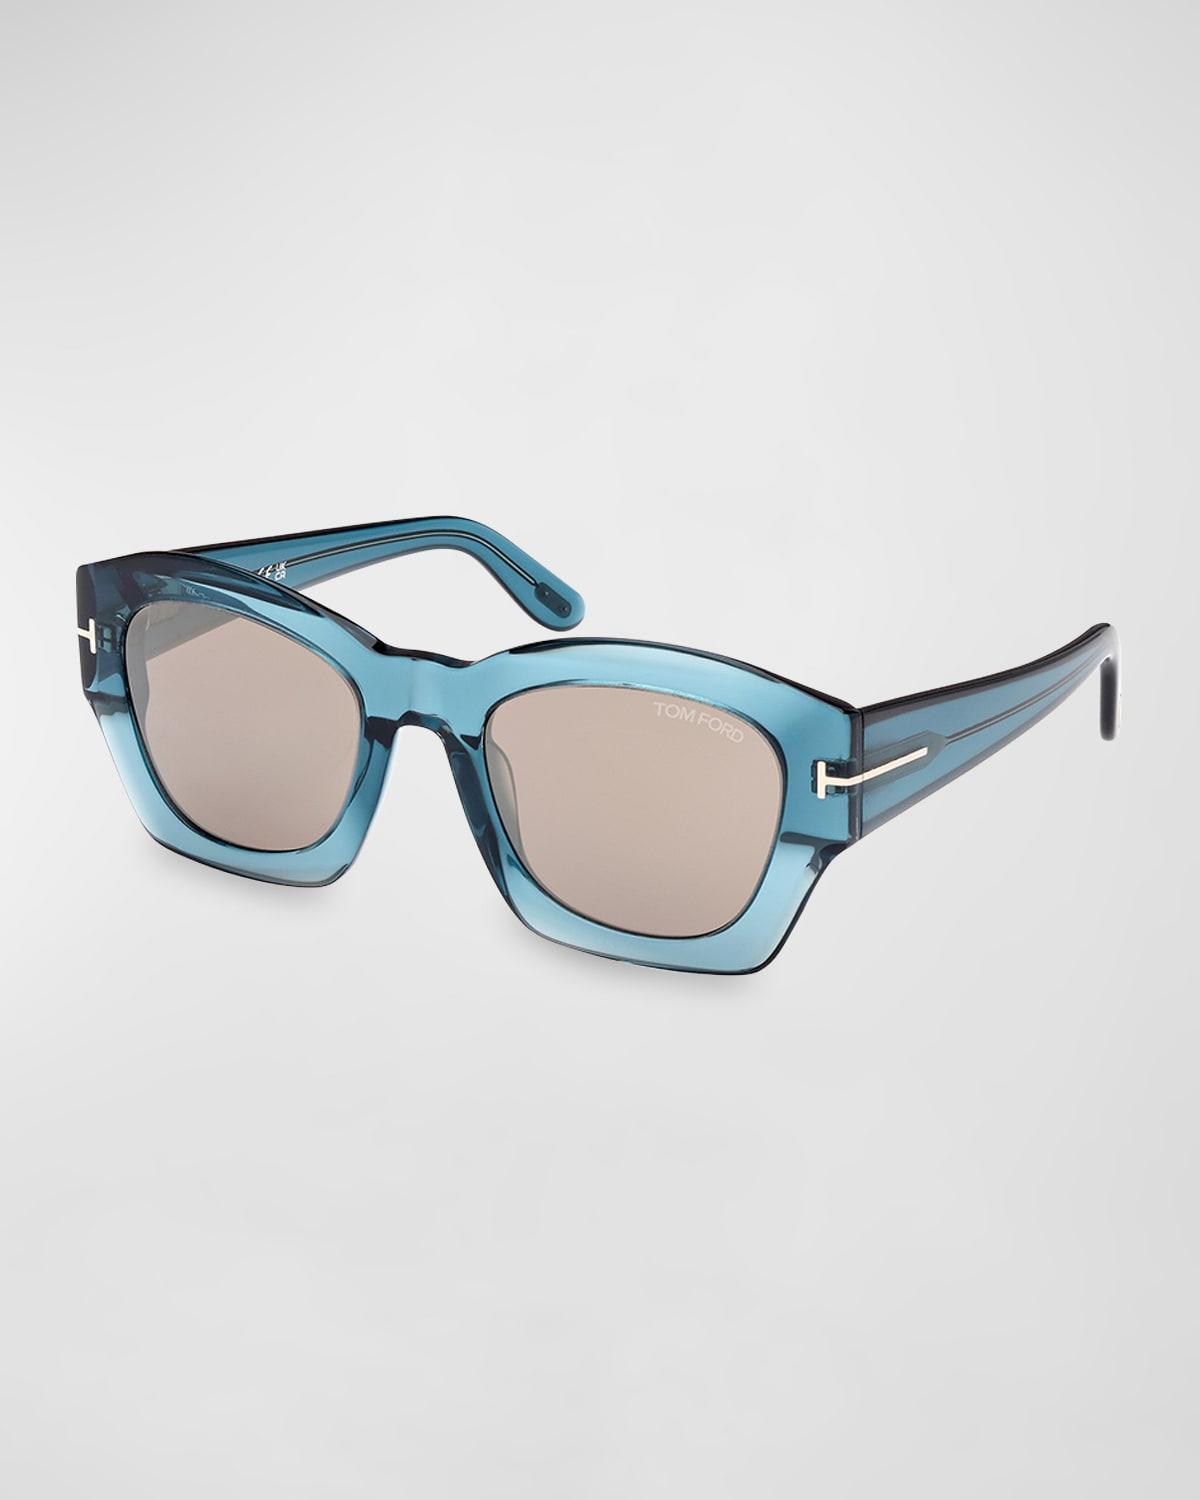 TOM FORD Guilliana 52mm Geometric Sunglasses Product Image